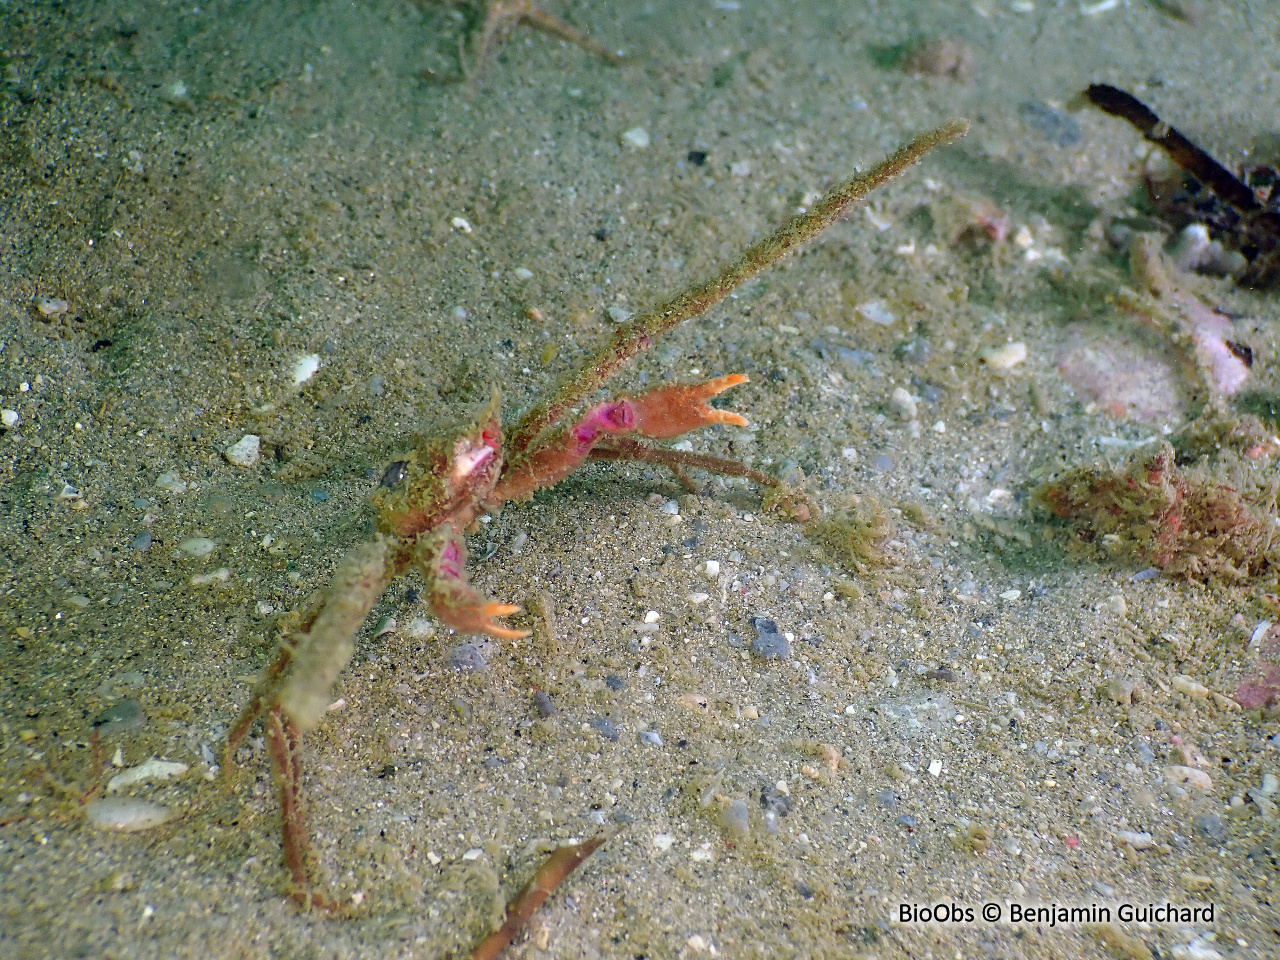 Crabe-araignée scorpion - Inachus dorsettensis - Benjamin Guichard - BioObs